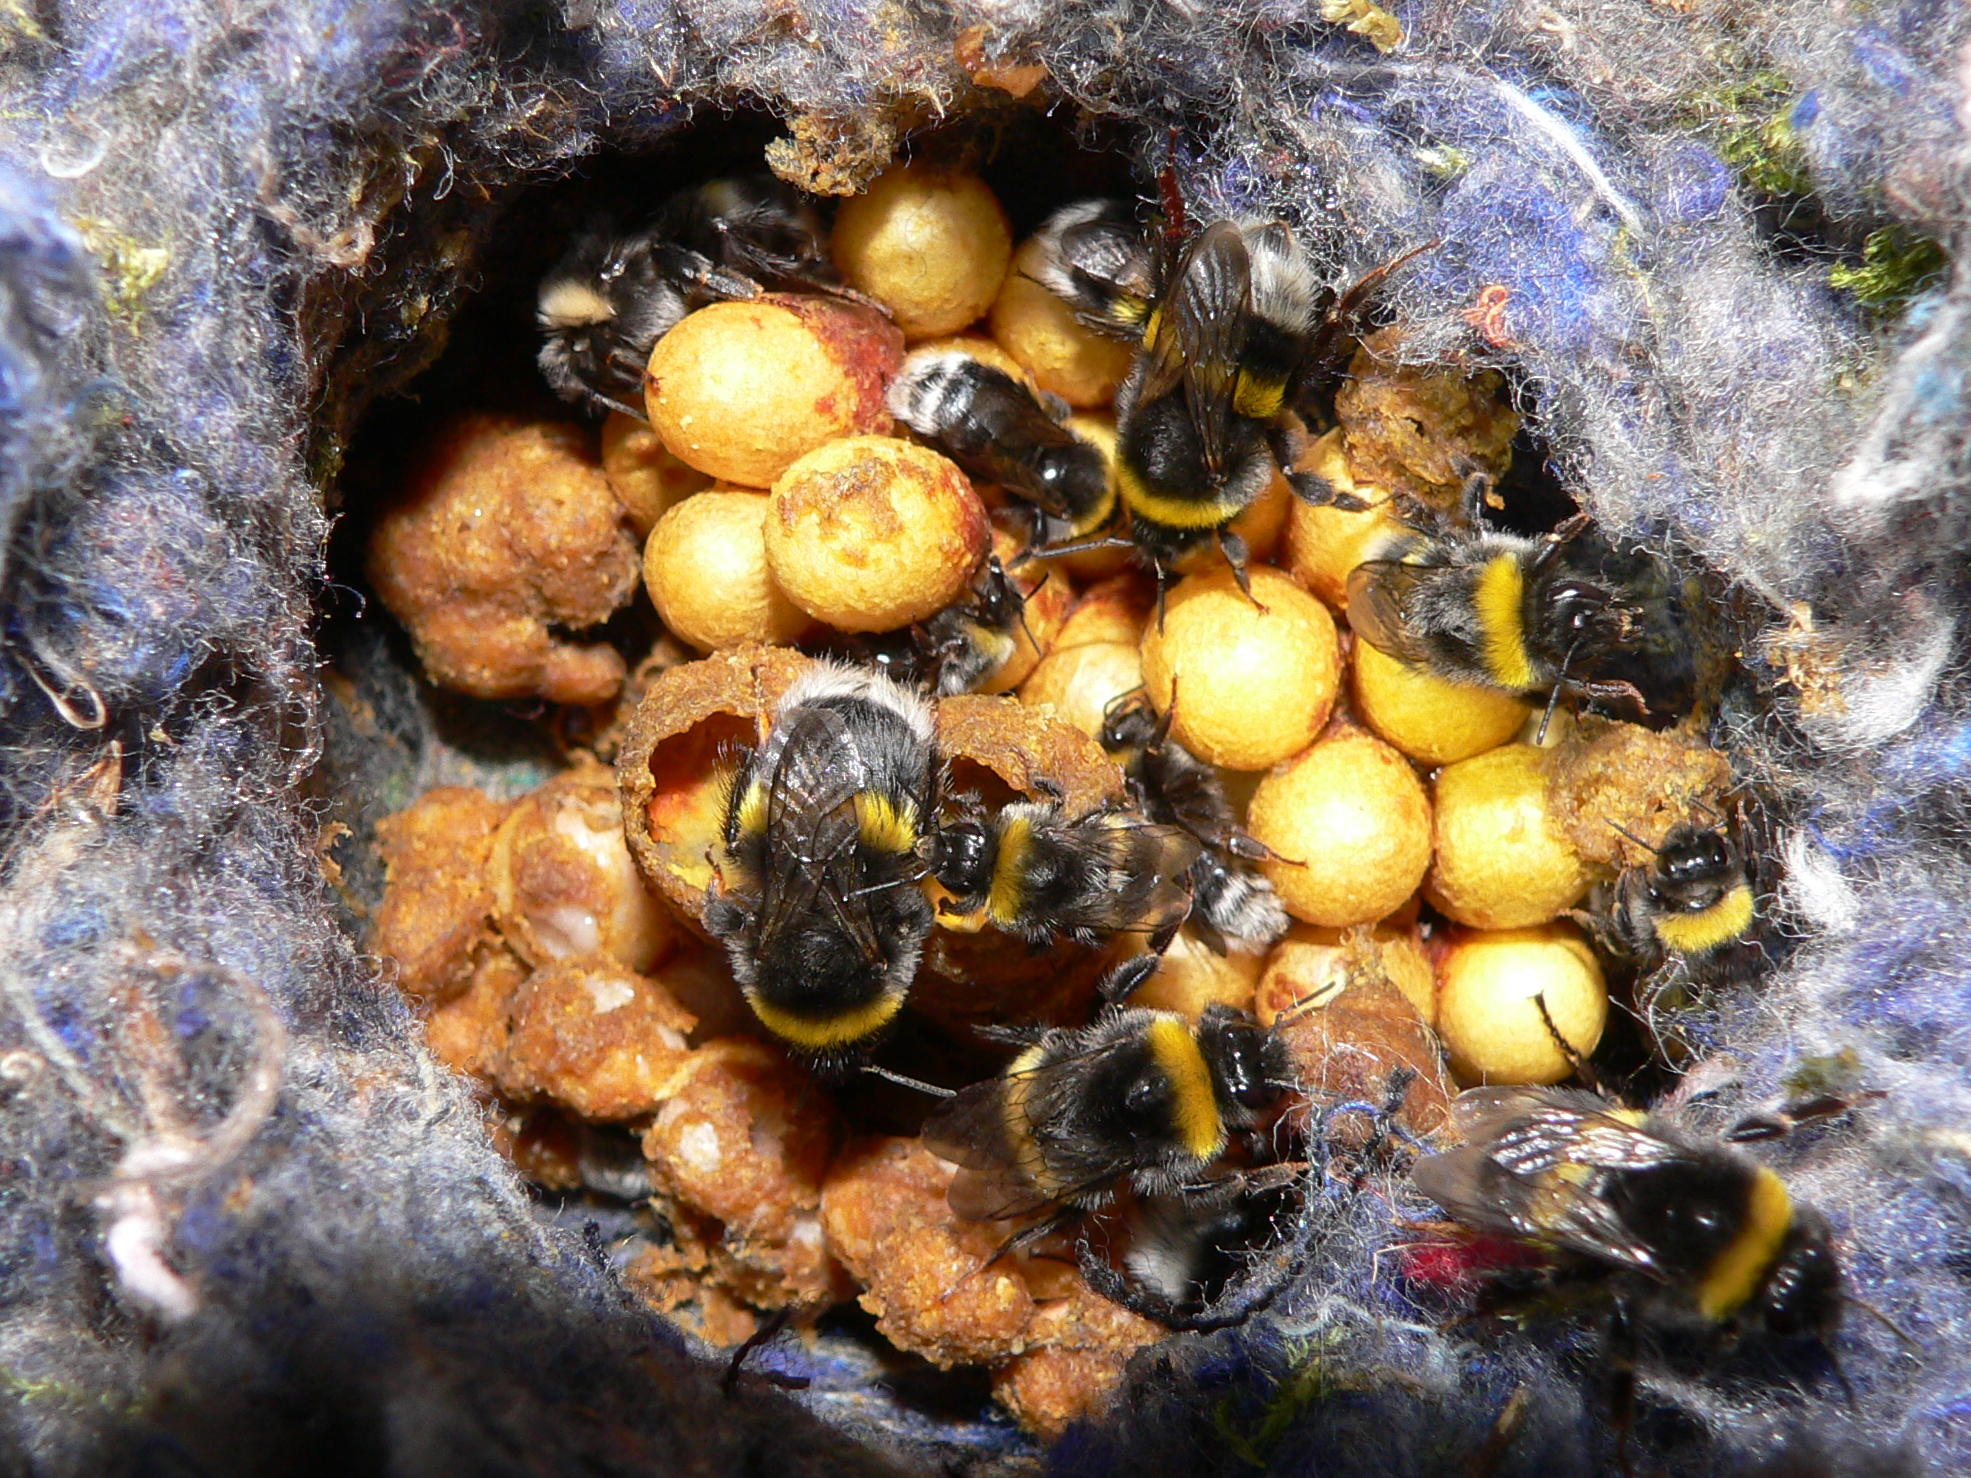 Čmeláci PLUS - Čmelák h8jový (Bombus lucorum) - hnízdo (nest) - Foto Jaromír Čížek